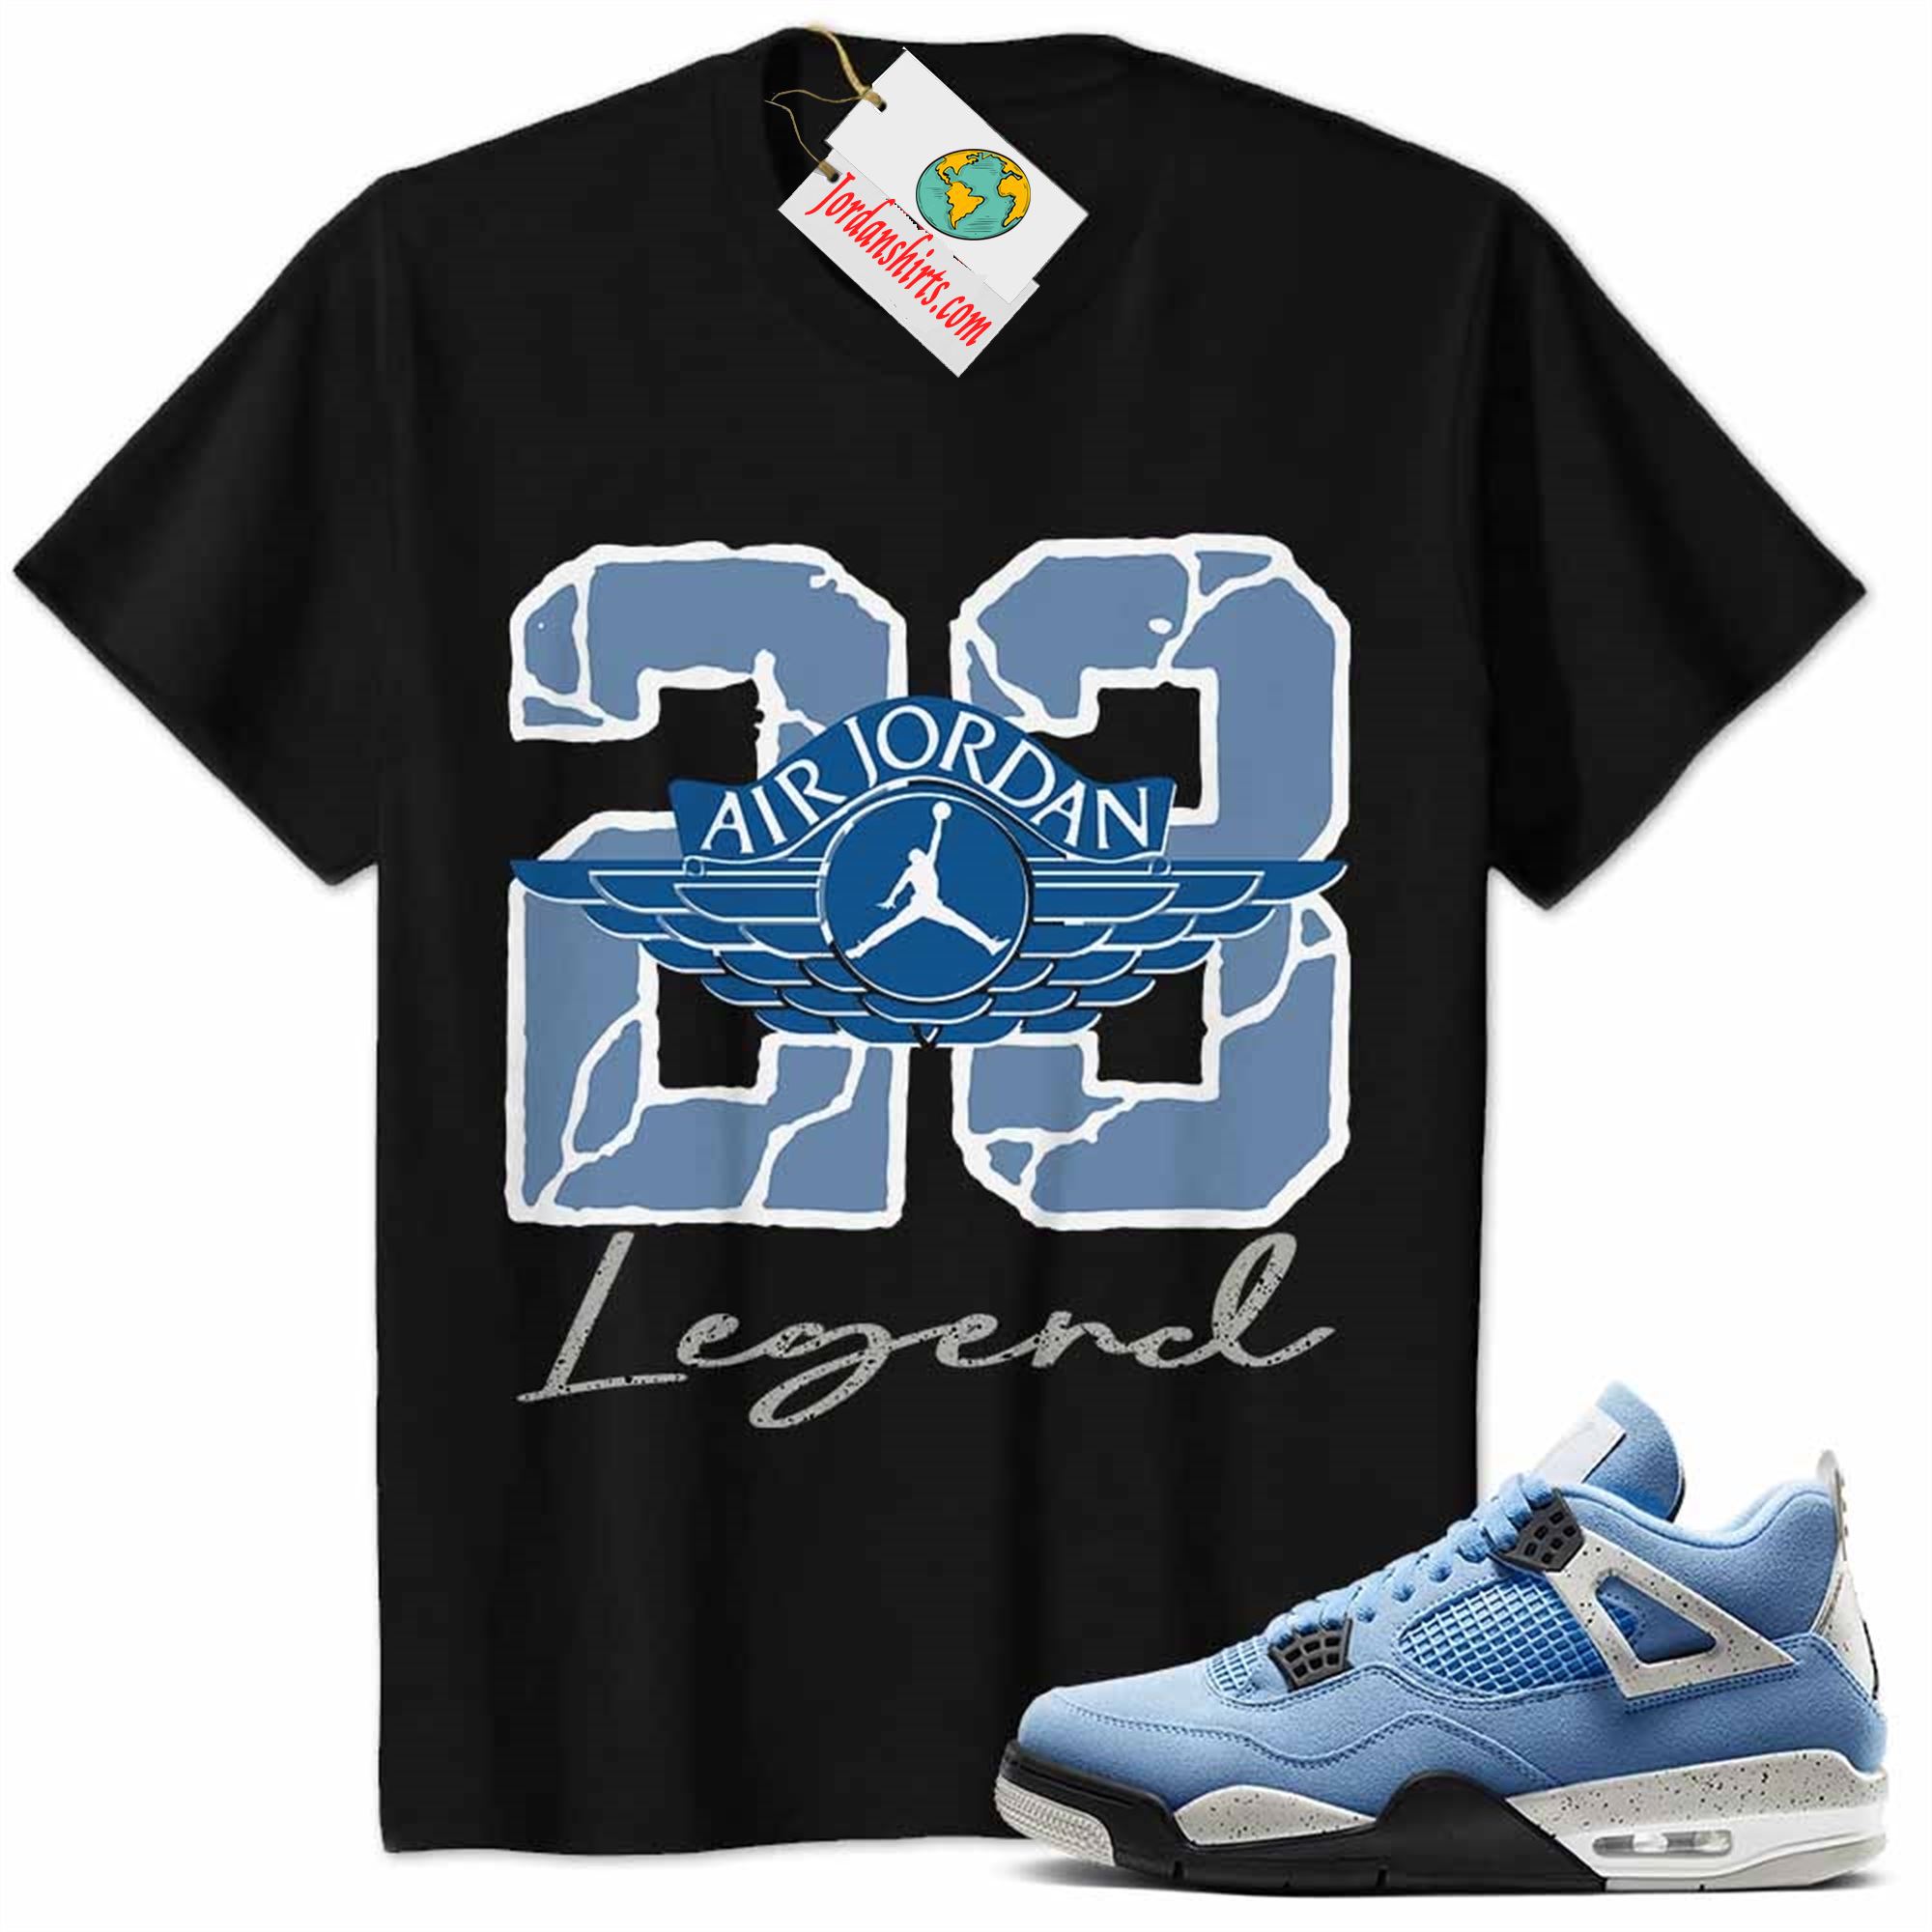 Jordan 4 Shirt, 23 Jordan Number Legend Black Air Jordan 4 University Blue 4s Full Size Up To 5xl